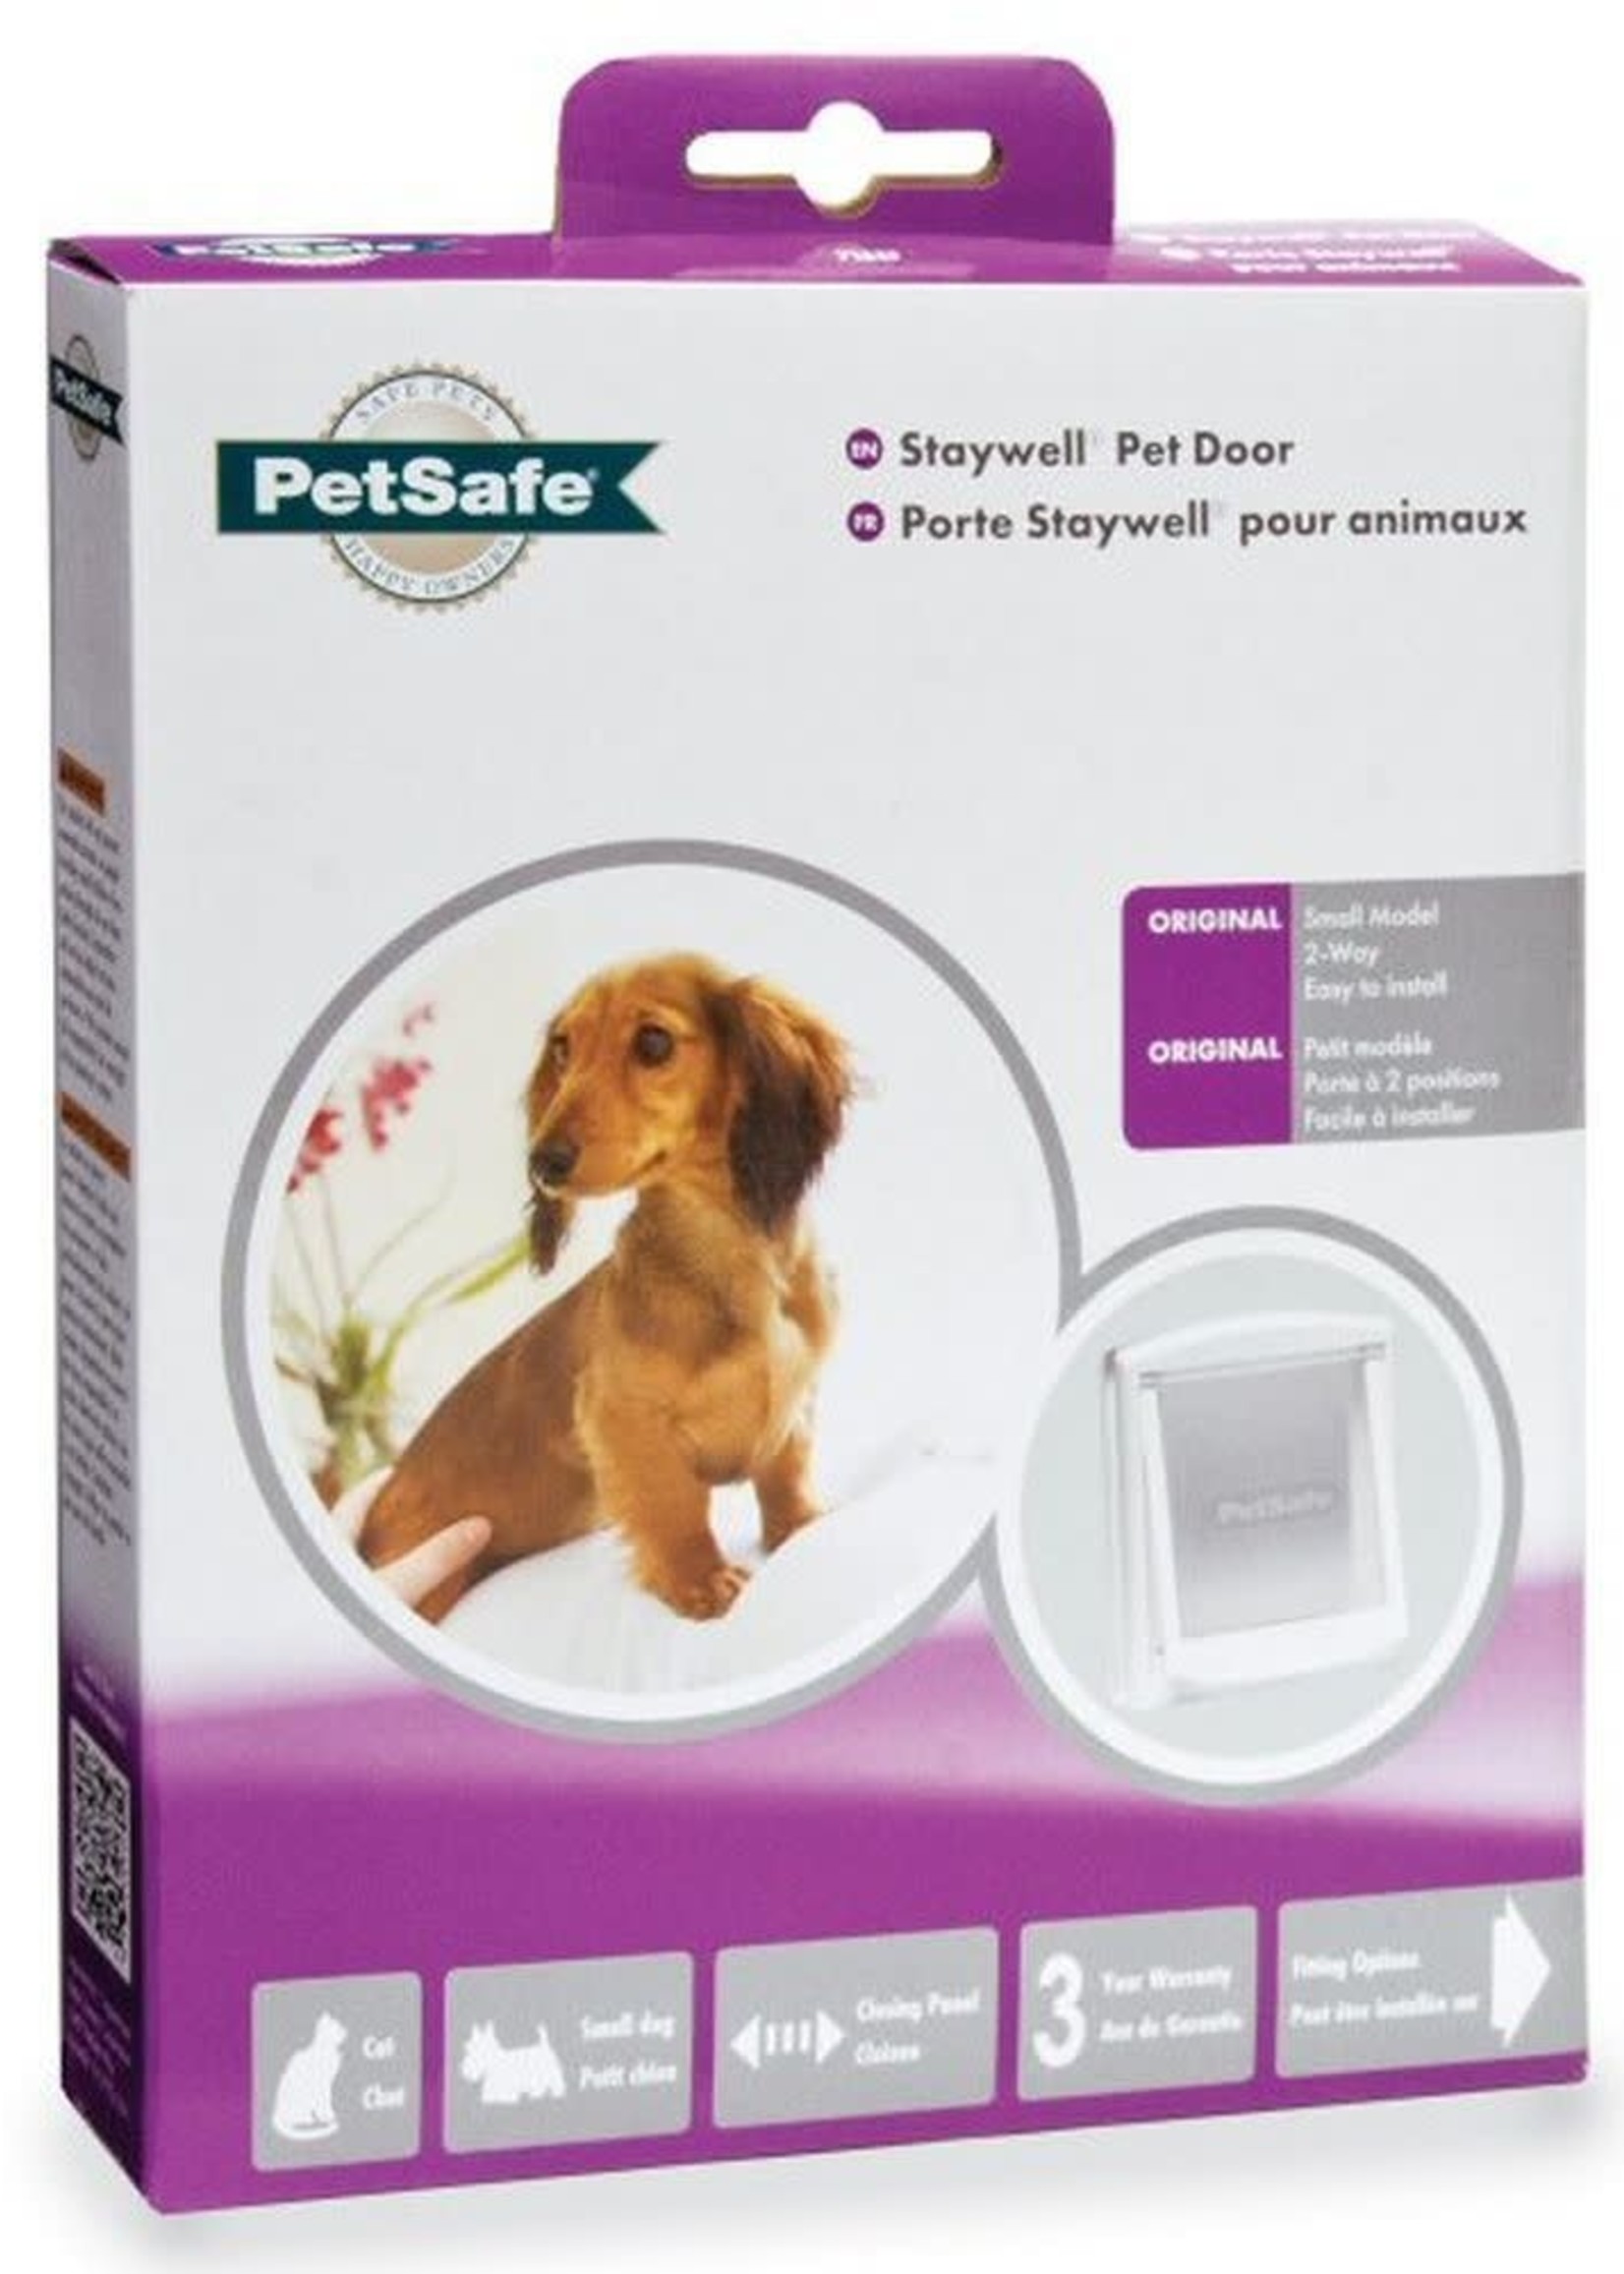 Petsafe 2 Way Pet Door Small